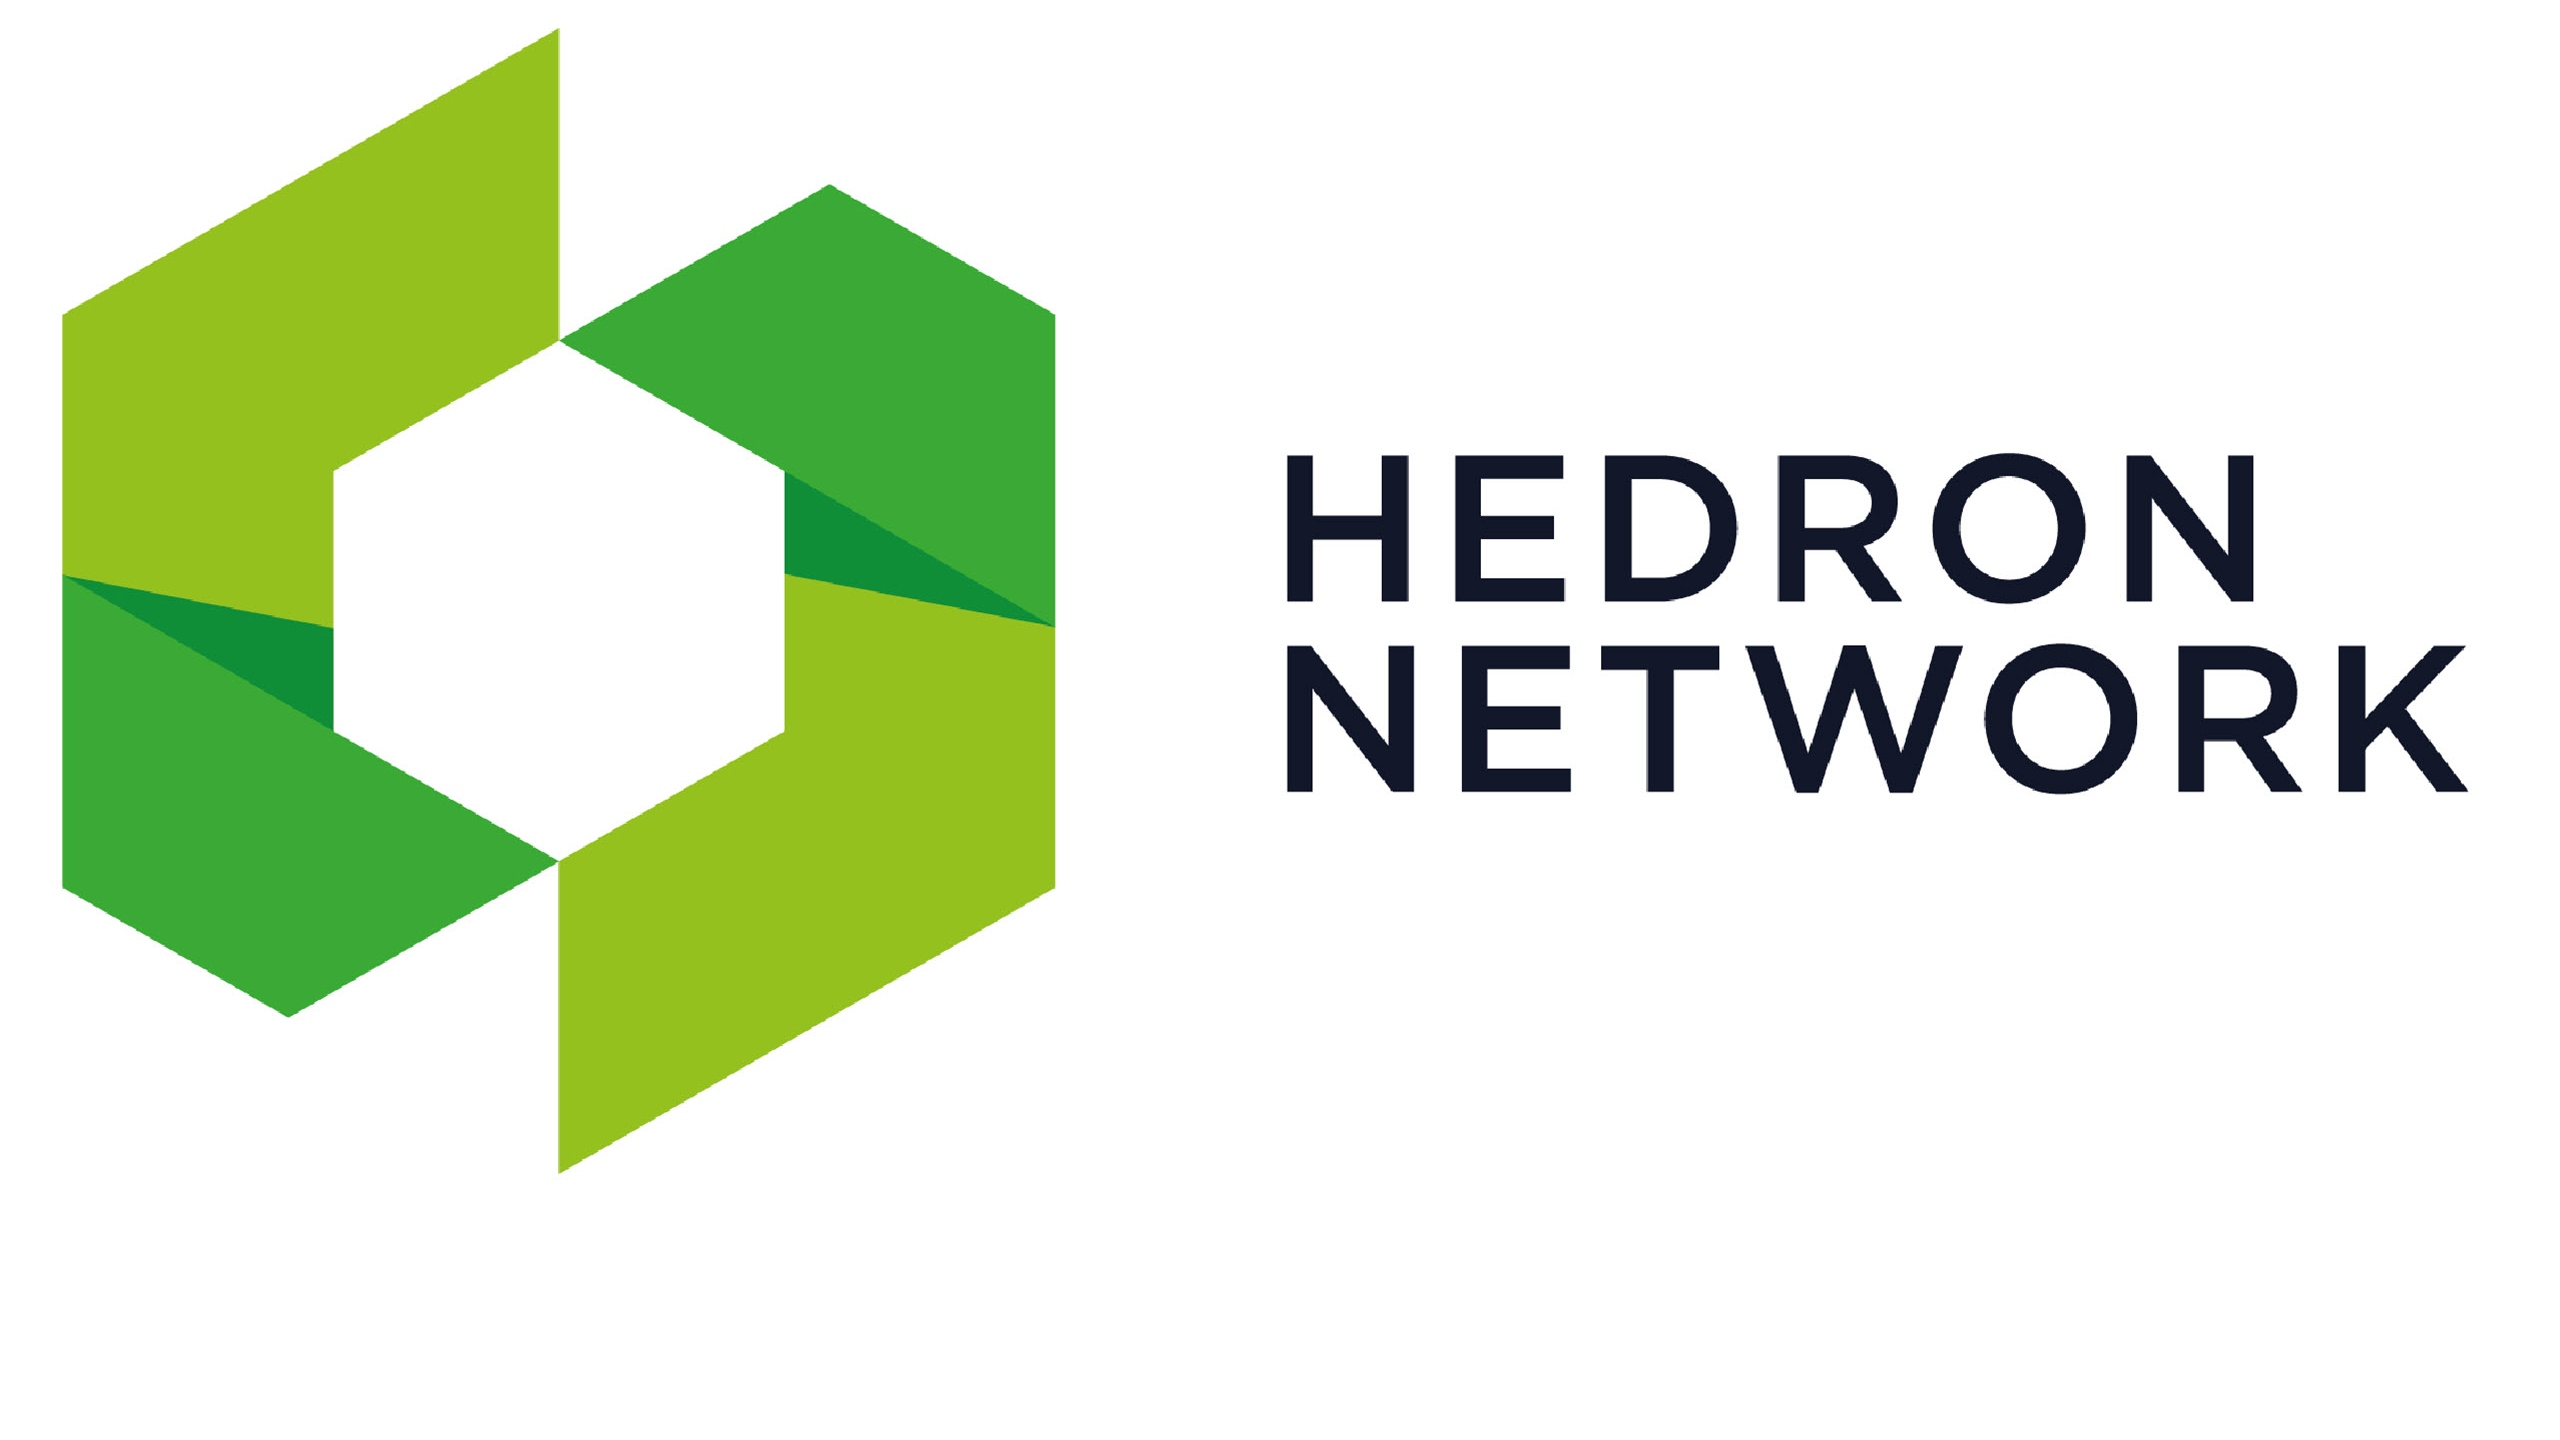 Hedron Network logo 2021